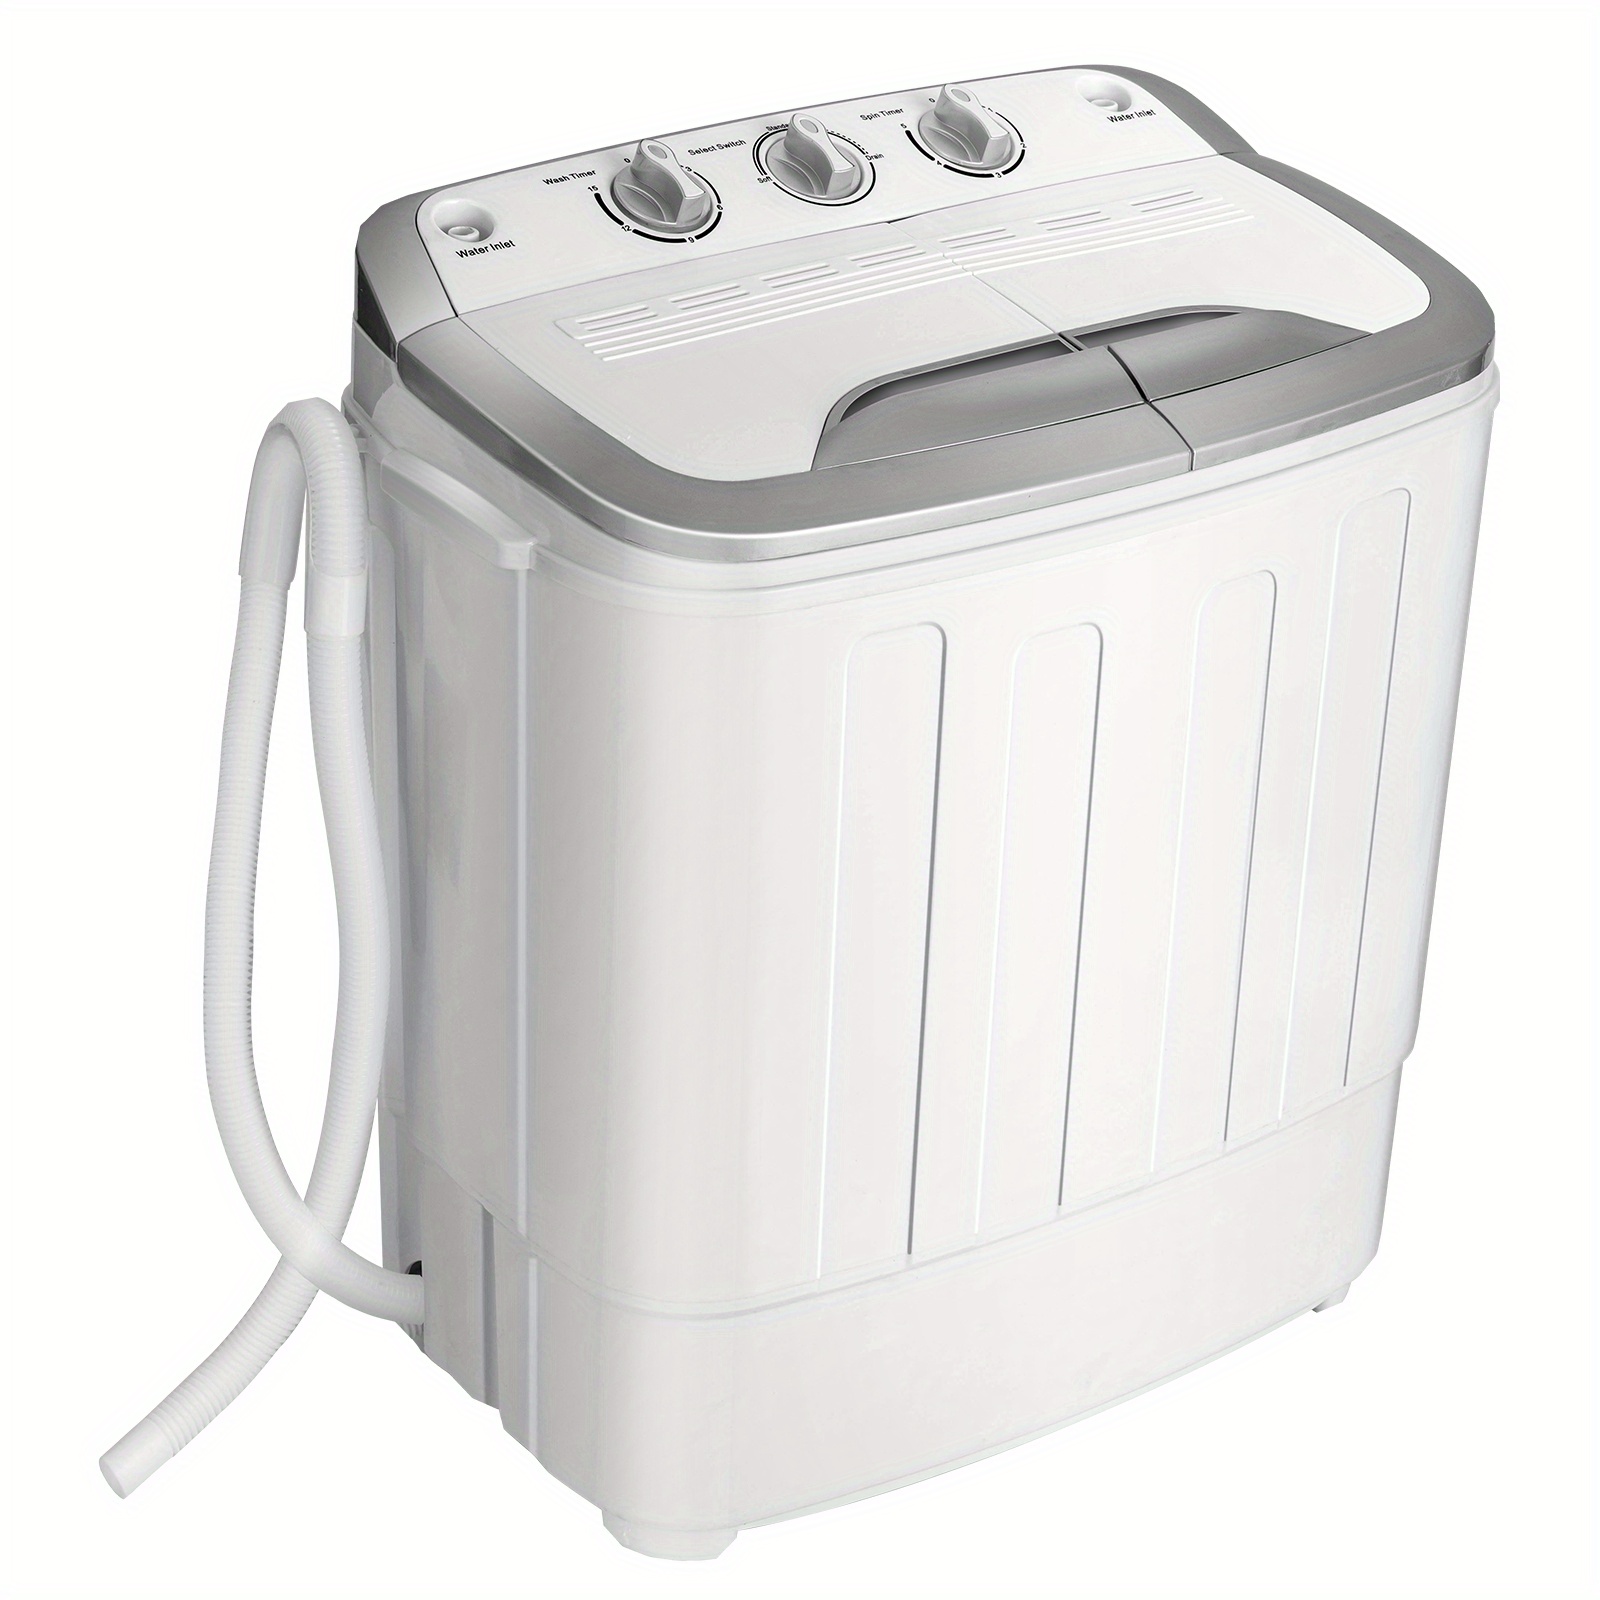 

Lifezeal 13lbs Portable Semi-automatic Twin Tub Wash Machine W/ Built-in Drain Pump Grey